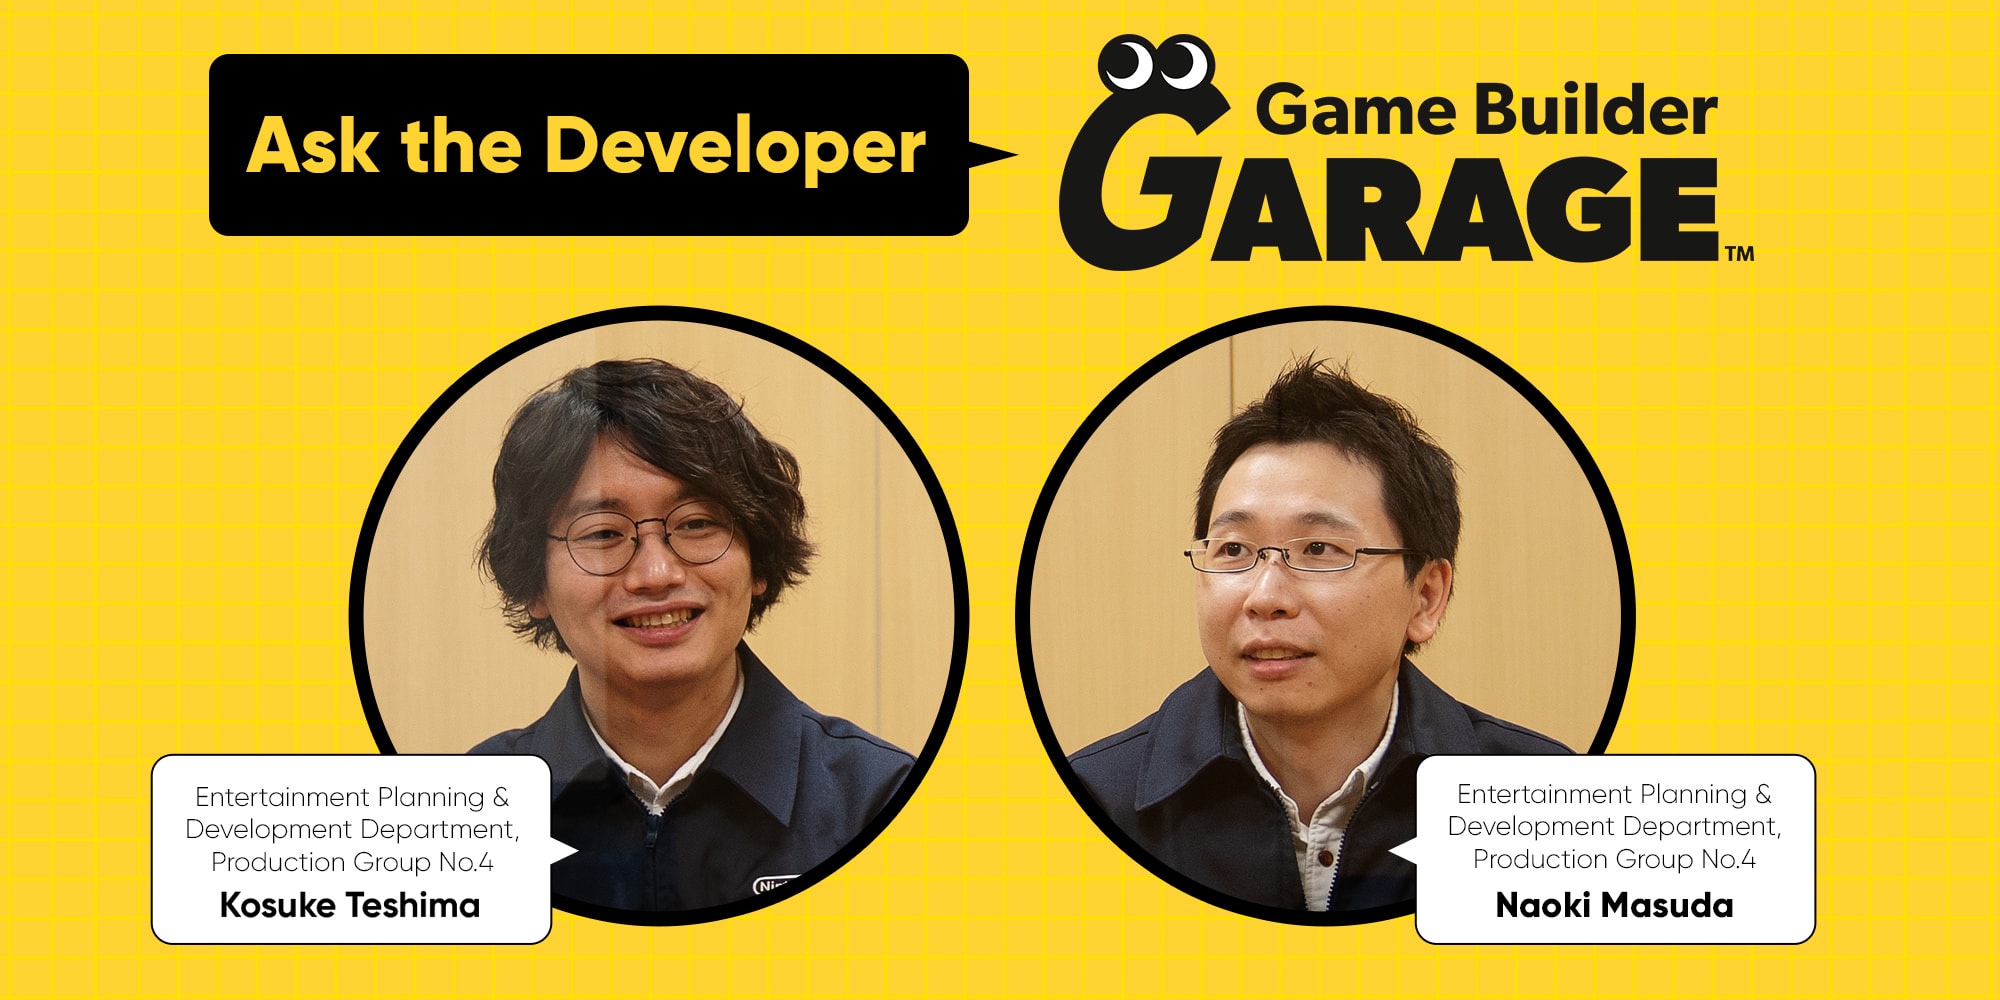 GBG - Ask the Developer Vol. 1 Hero Image